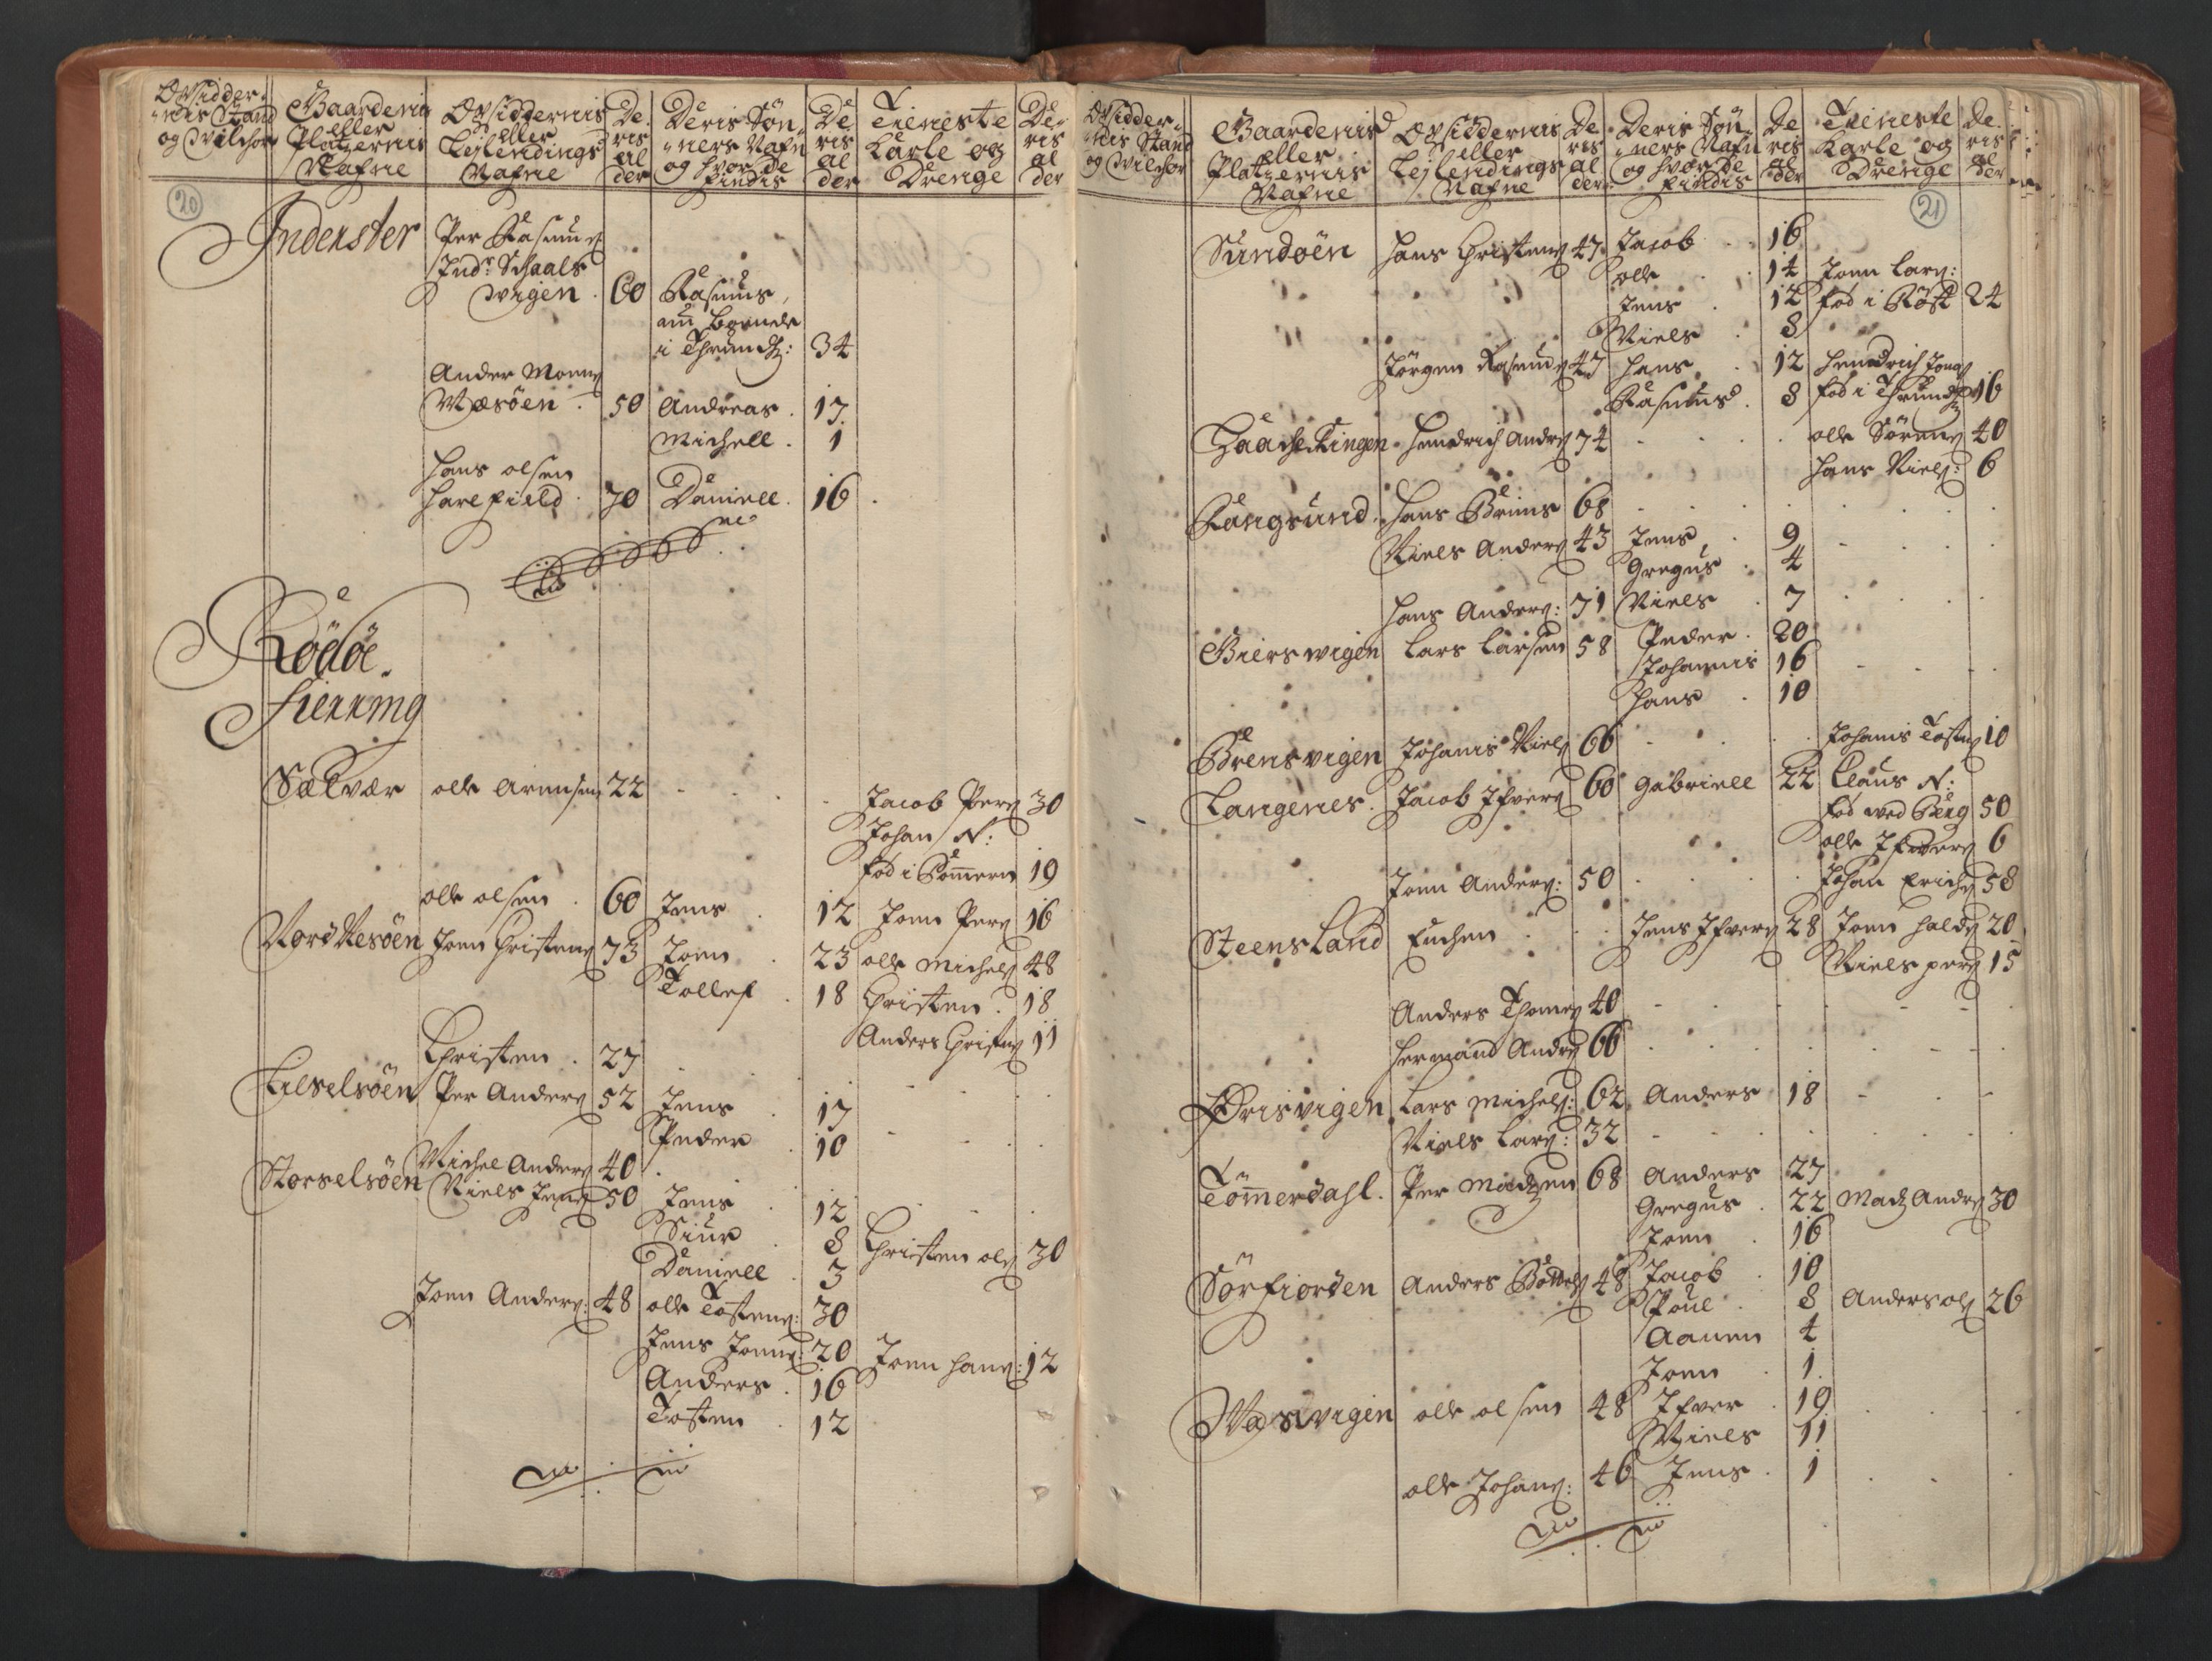 RA, Census (manntall) 1701, no. 16: Helgeland fogderi, 1701, p. 20-21